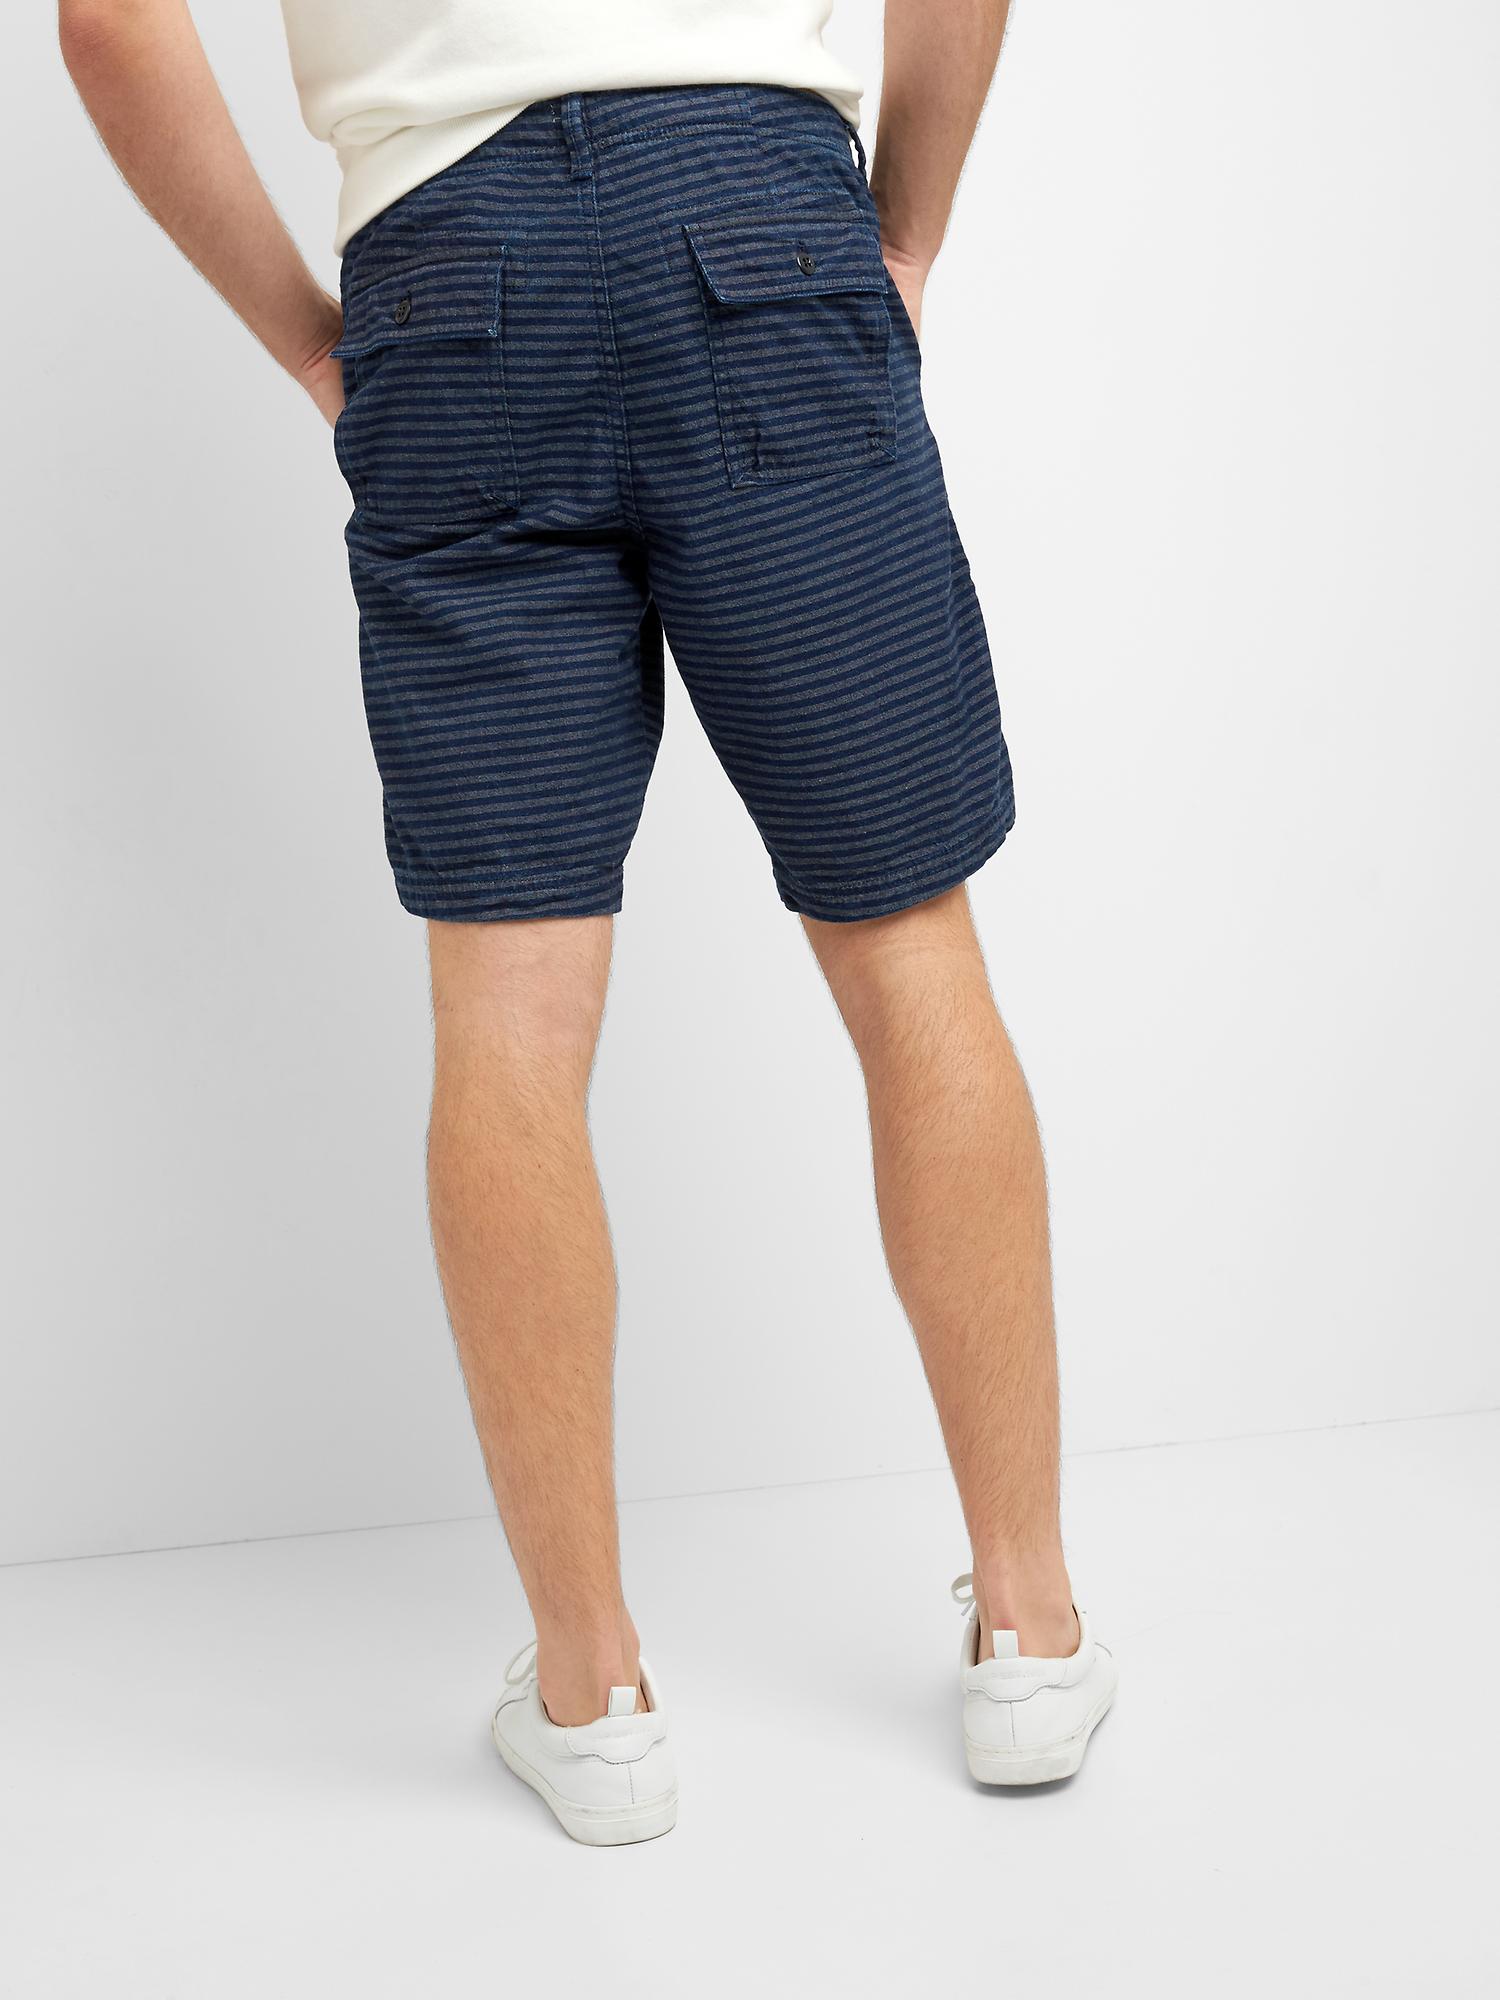 Stripe fatigue shorts (10